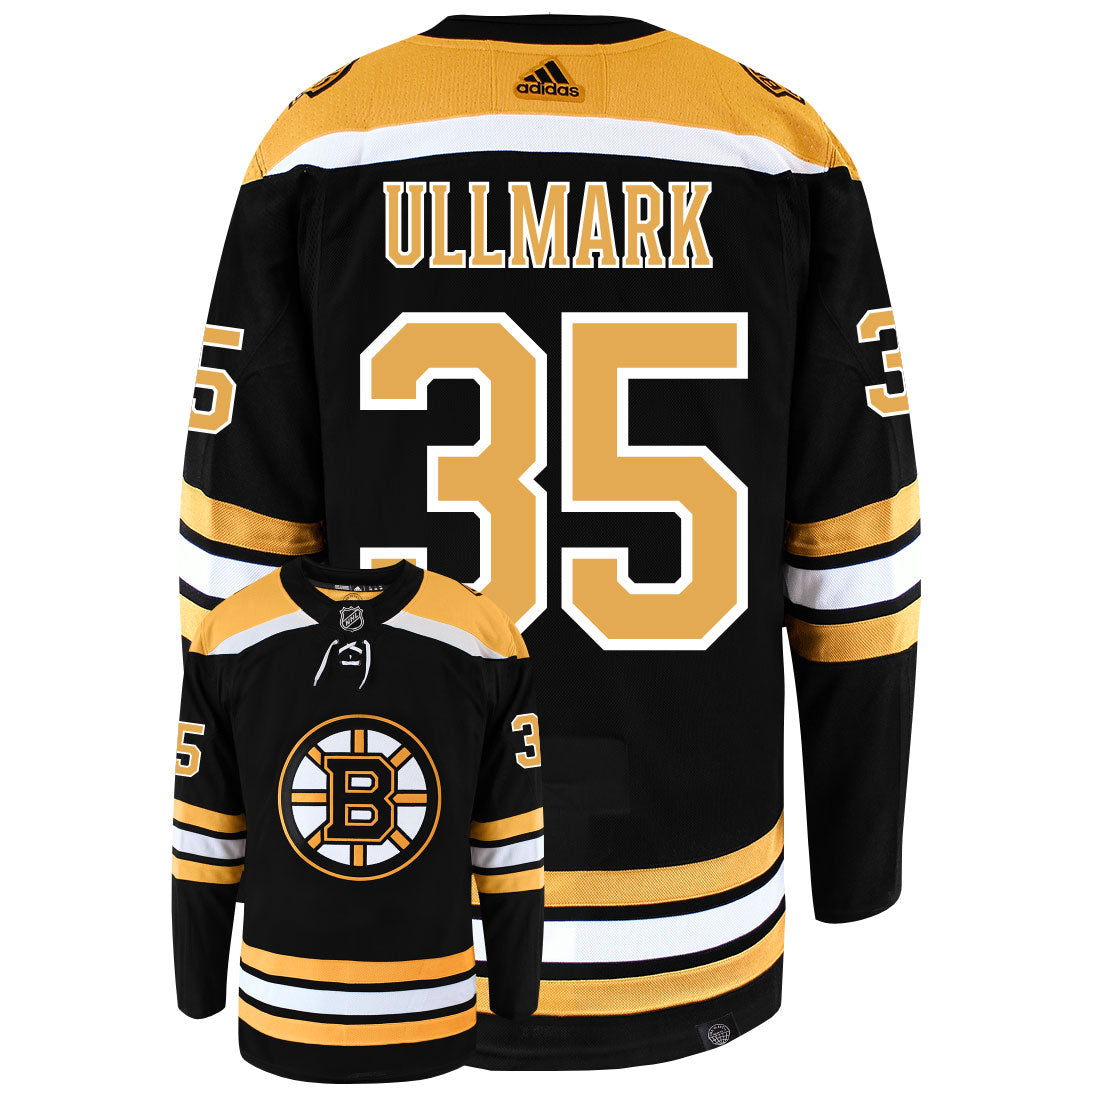 Linus Ullmark Boston Bruins Fanatics Authentic Autographed 2022-23